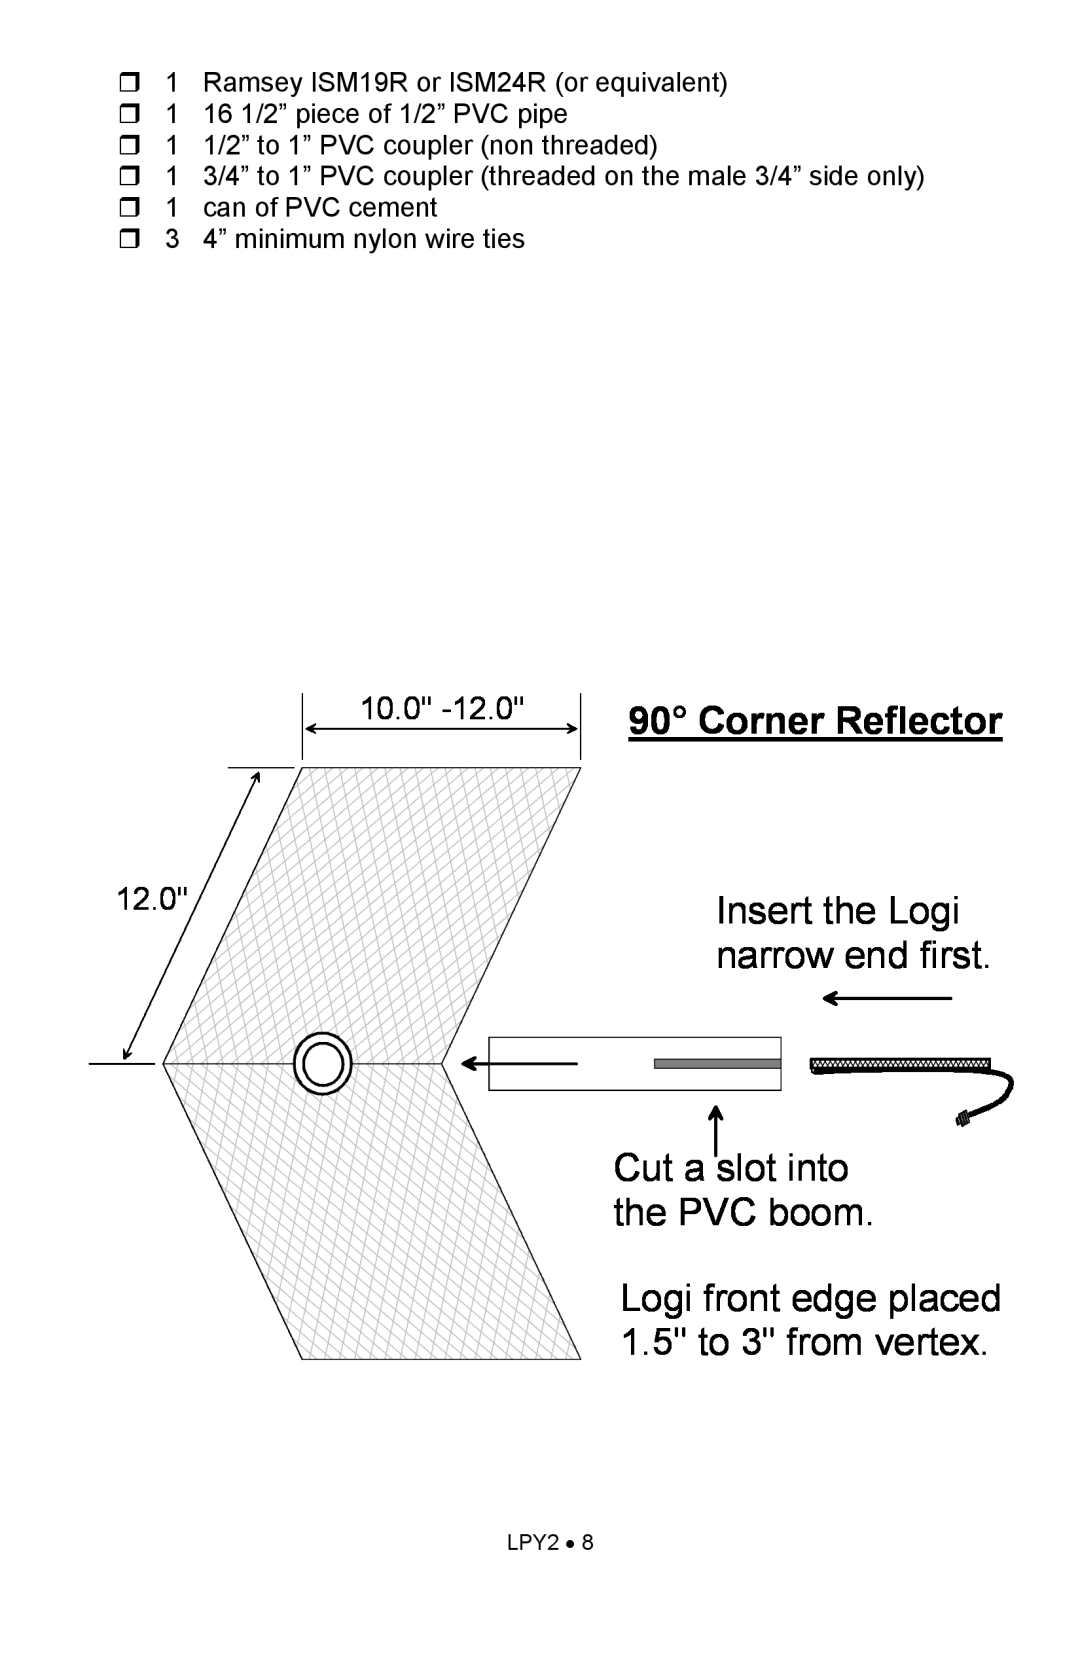 Ramsey Electronics LPY2 manual 10.0, Insert the Logi, narrow end first, Cut a slot into the PVC boom, Corner Reflector 